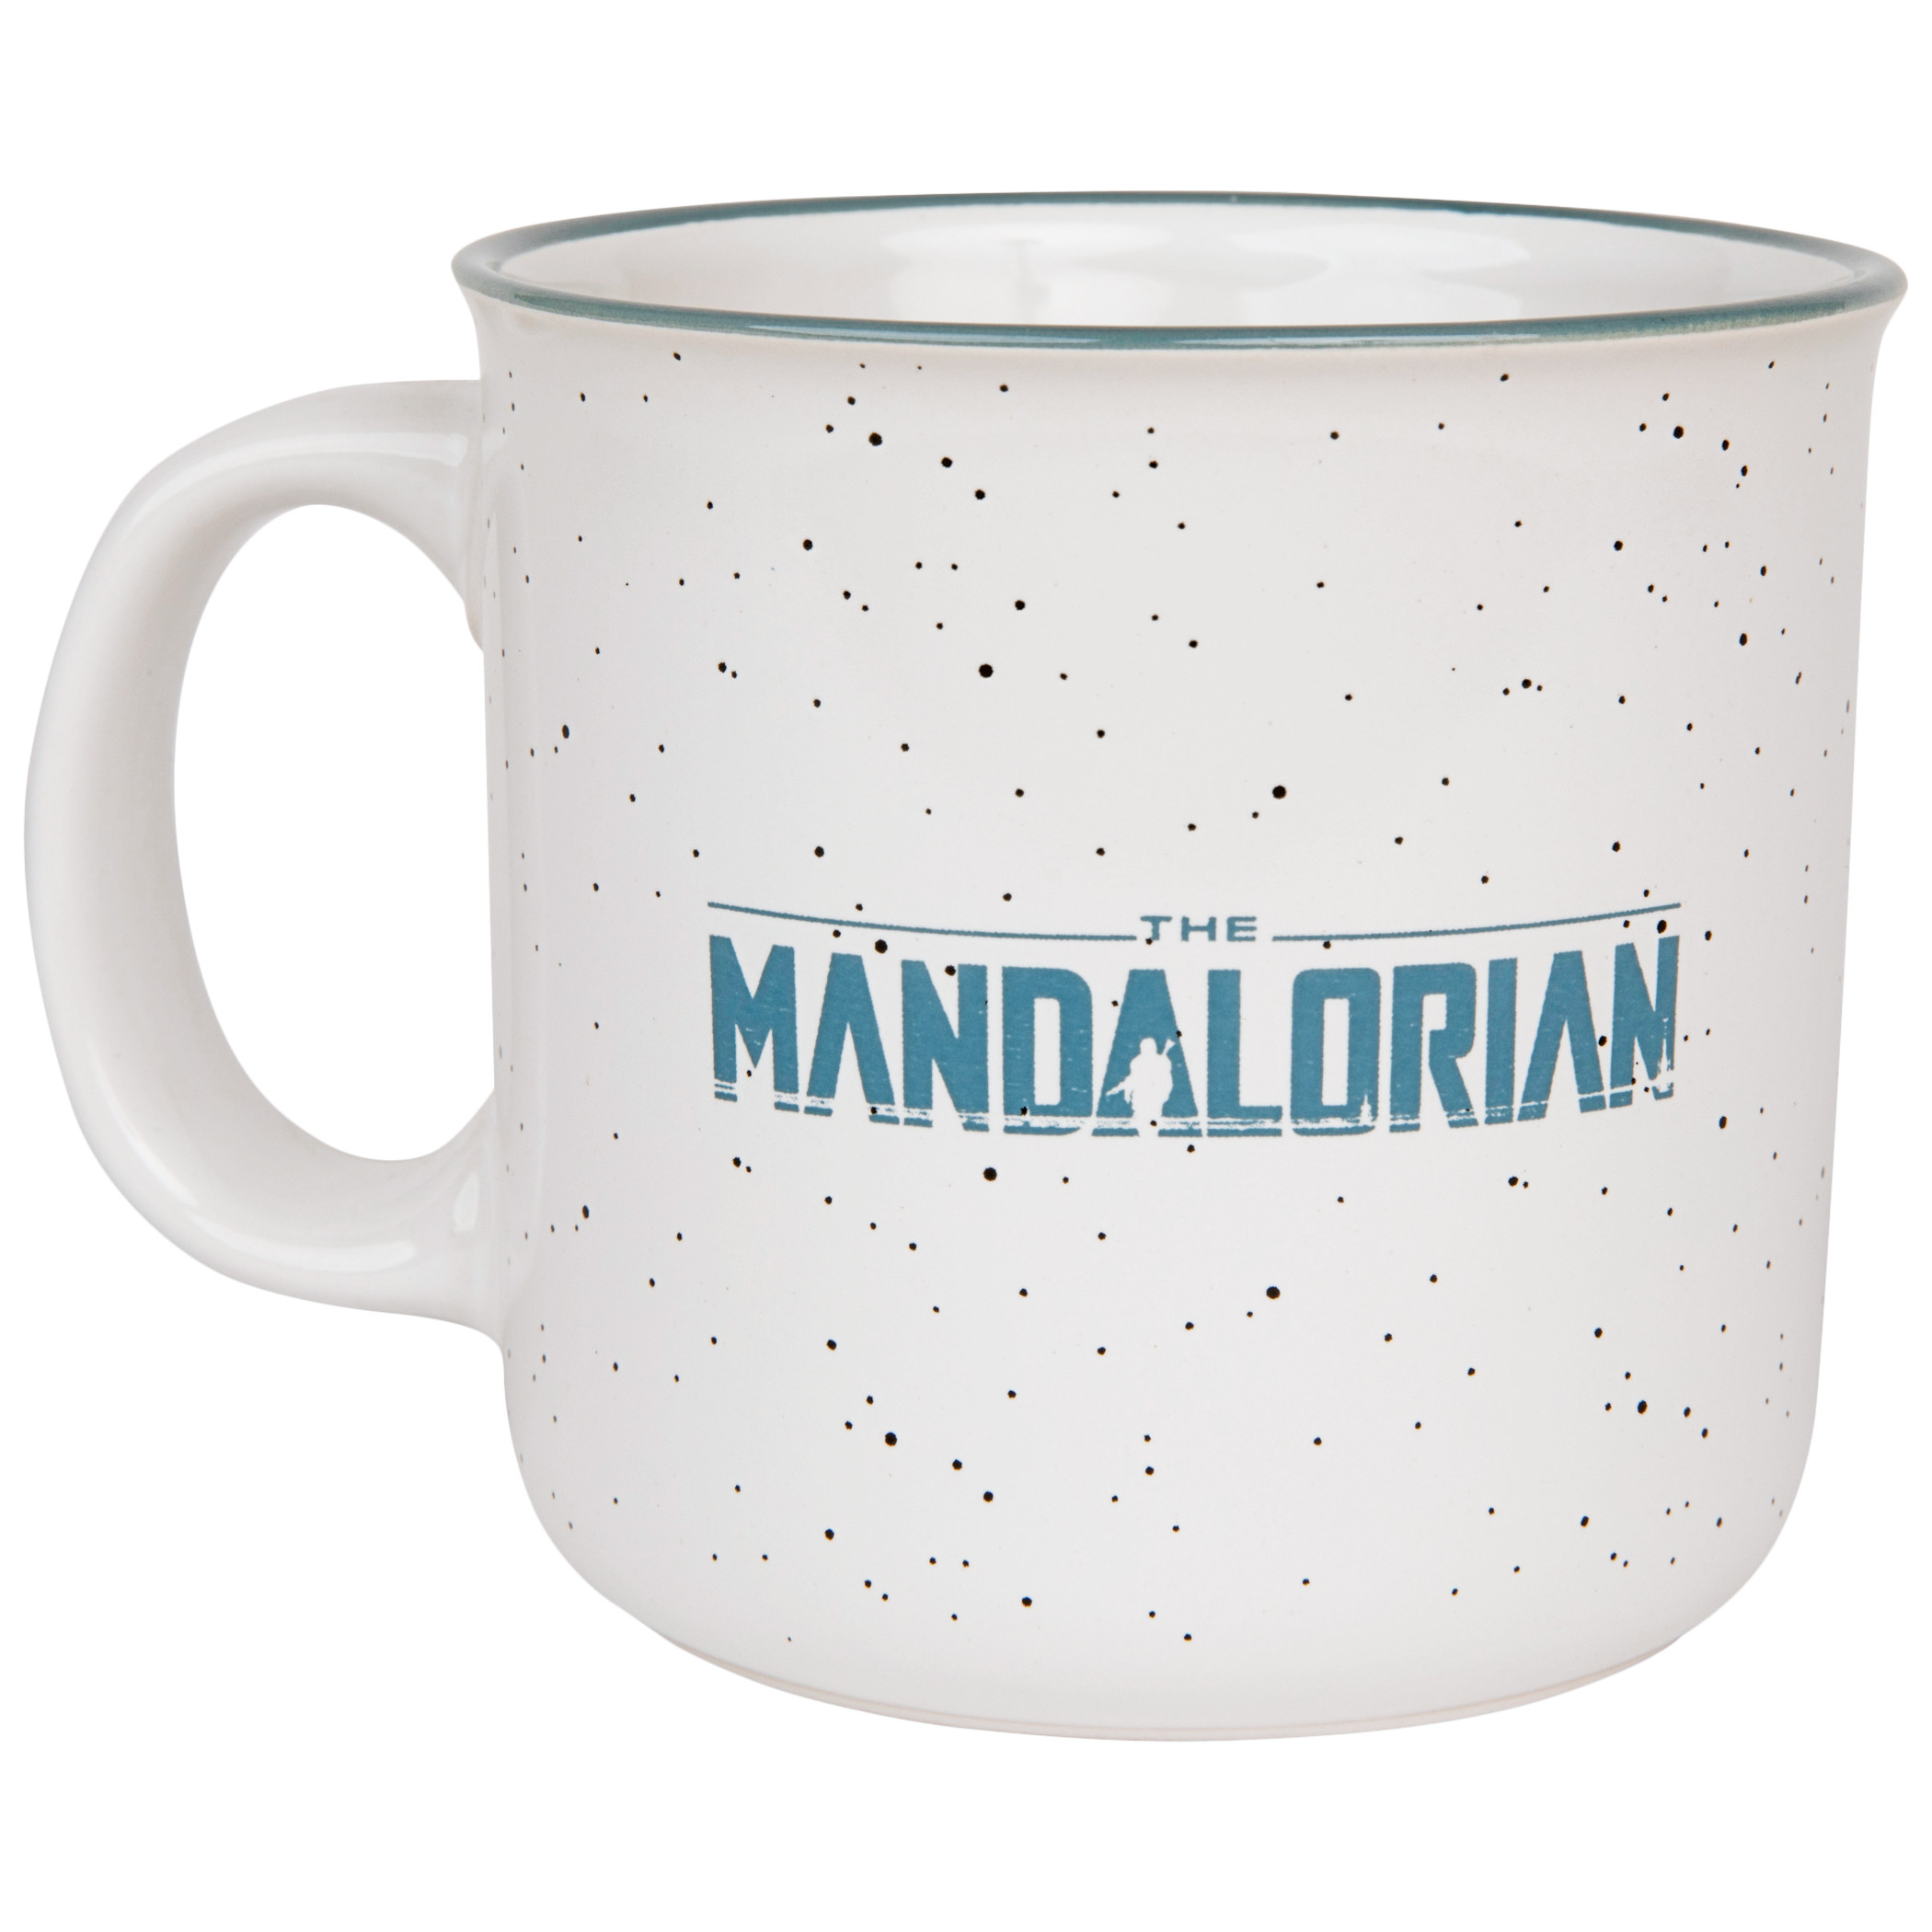 Star Wars: The Mandalorian Adventure 11 oz. Mug